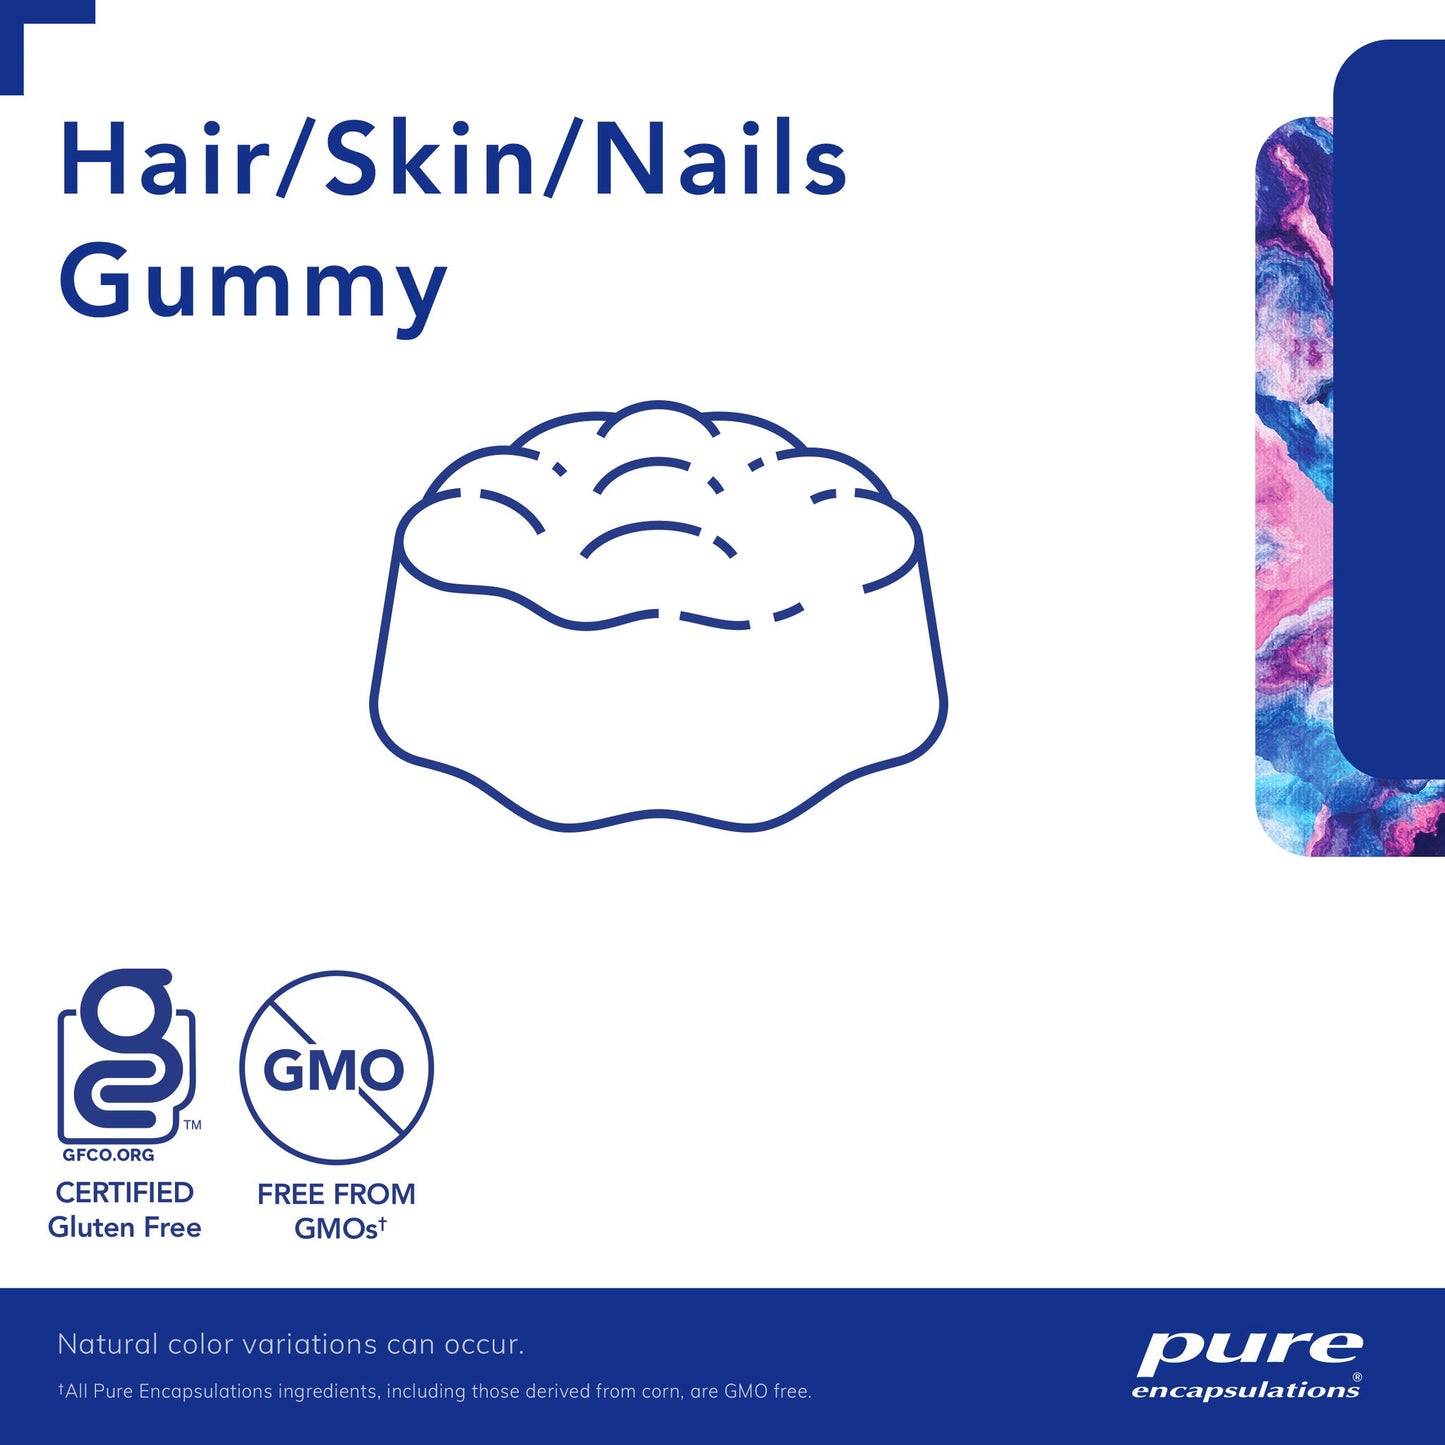 Hair/Skin/Nails Gummy